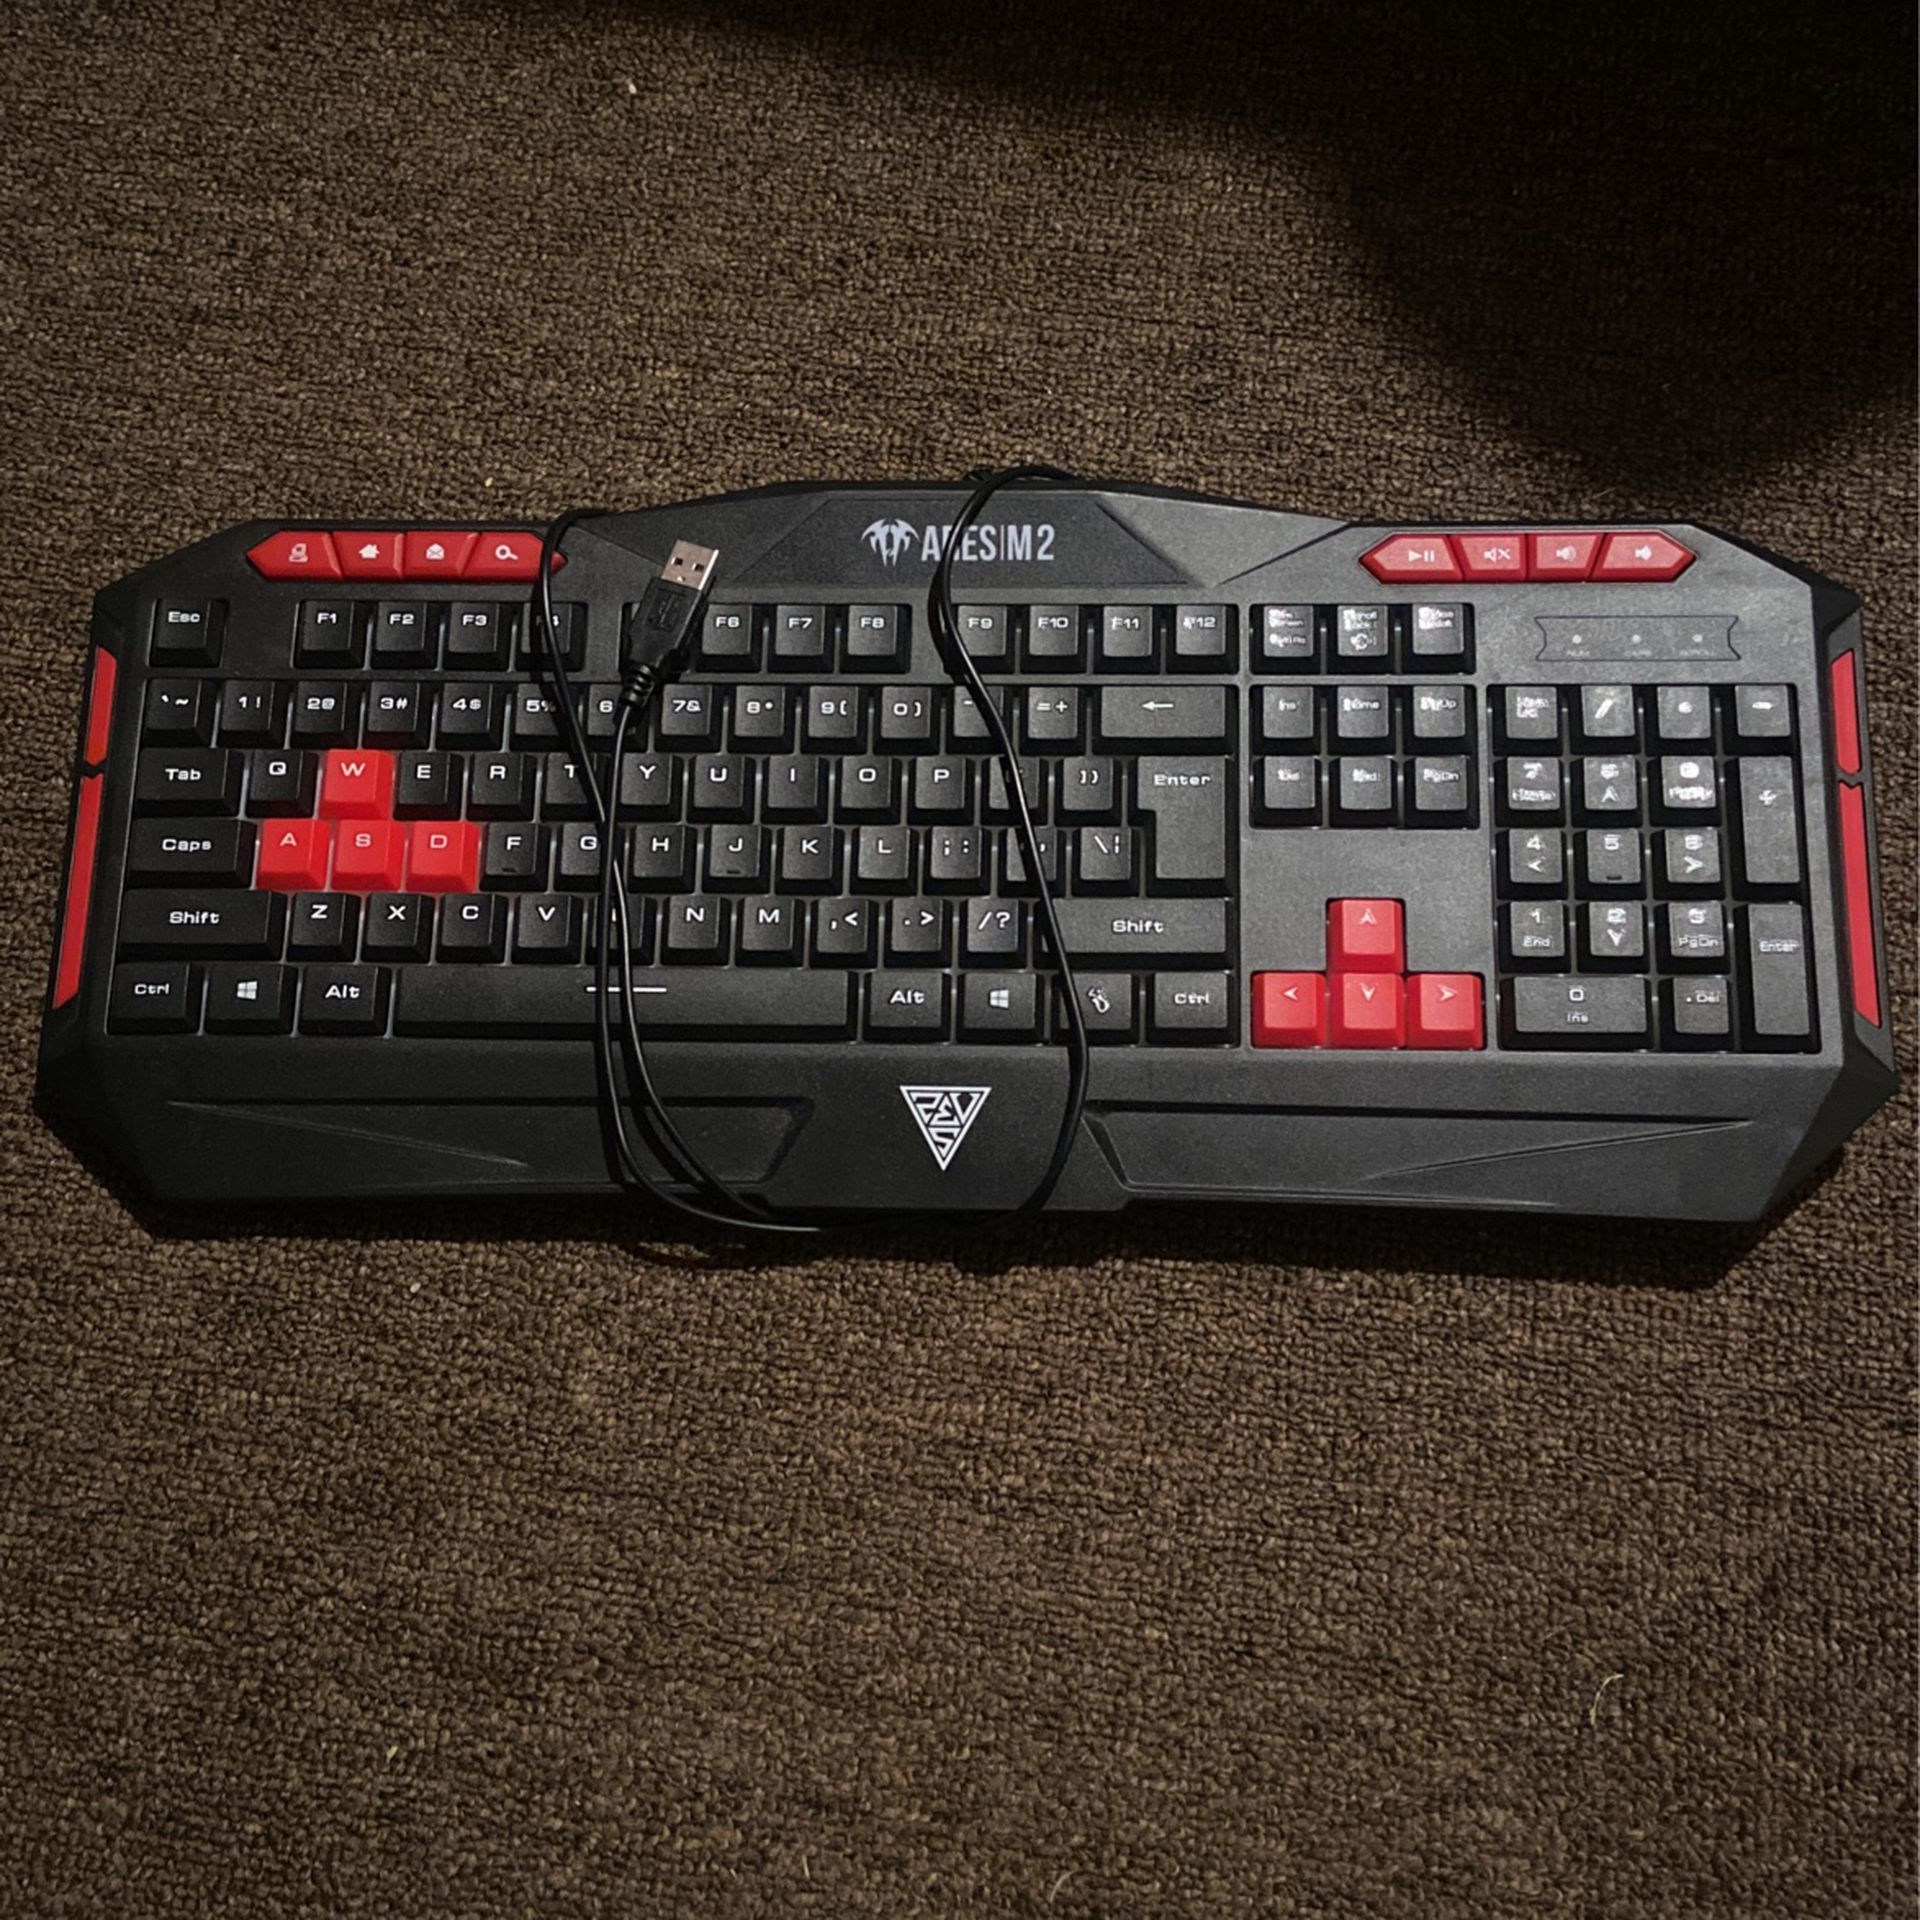 Ares M2 Keyboard 